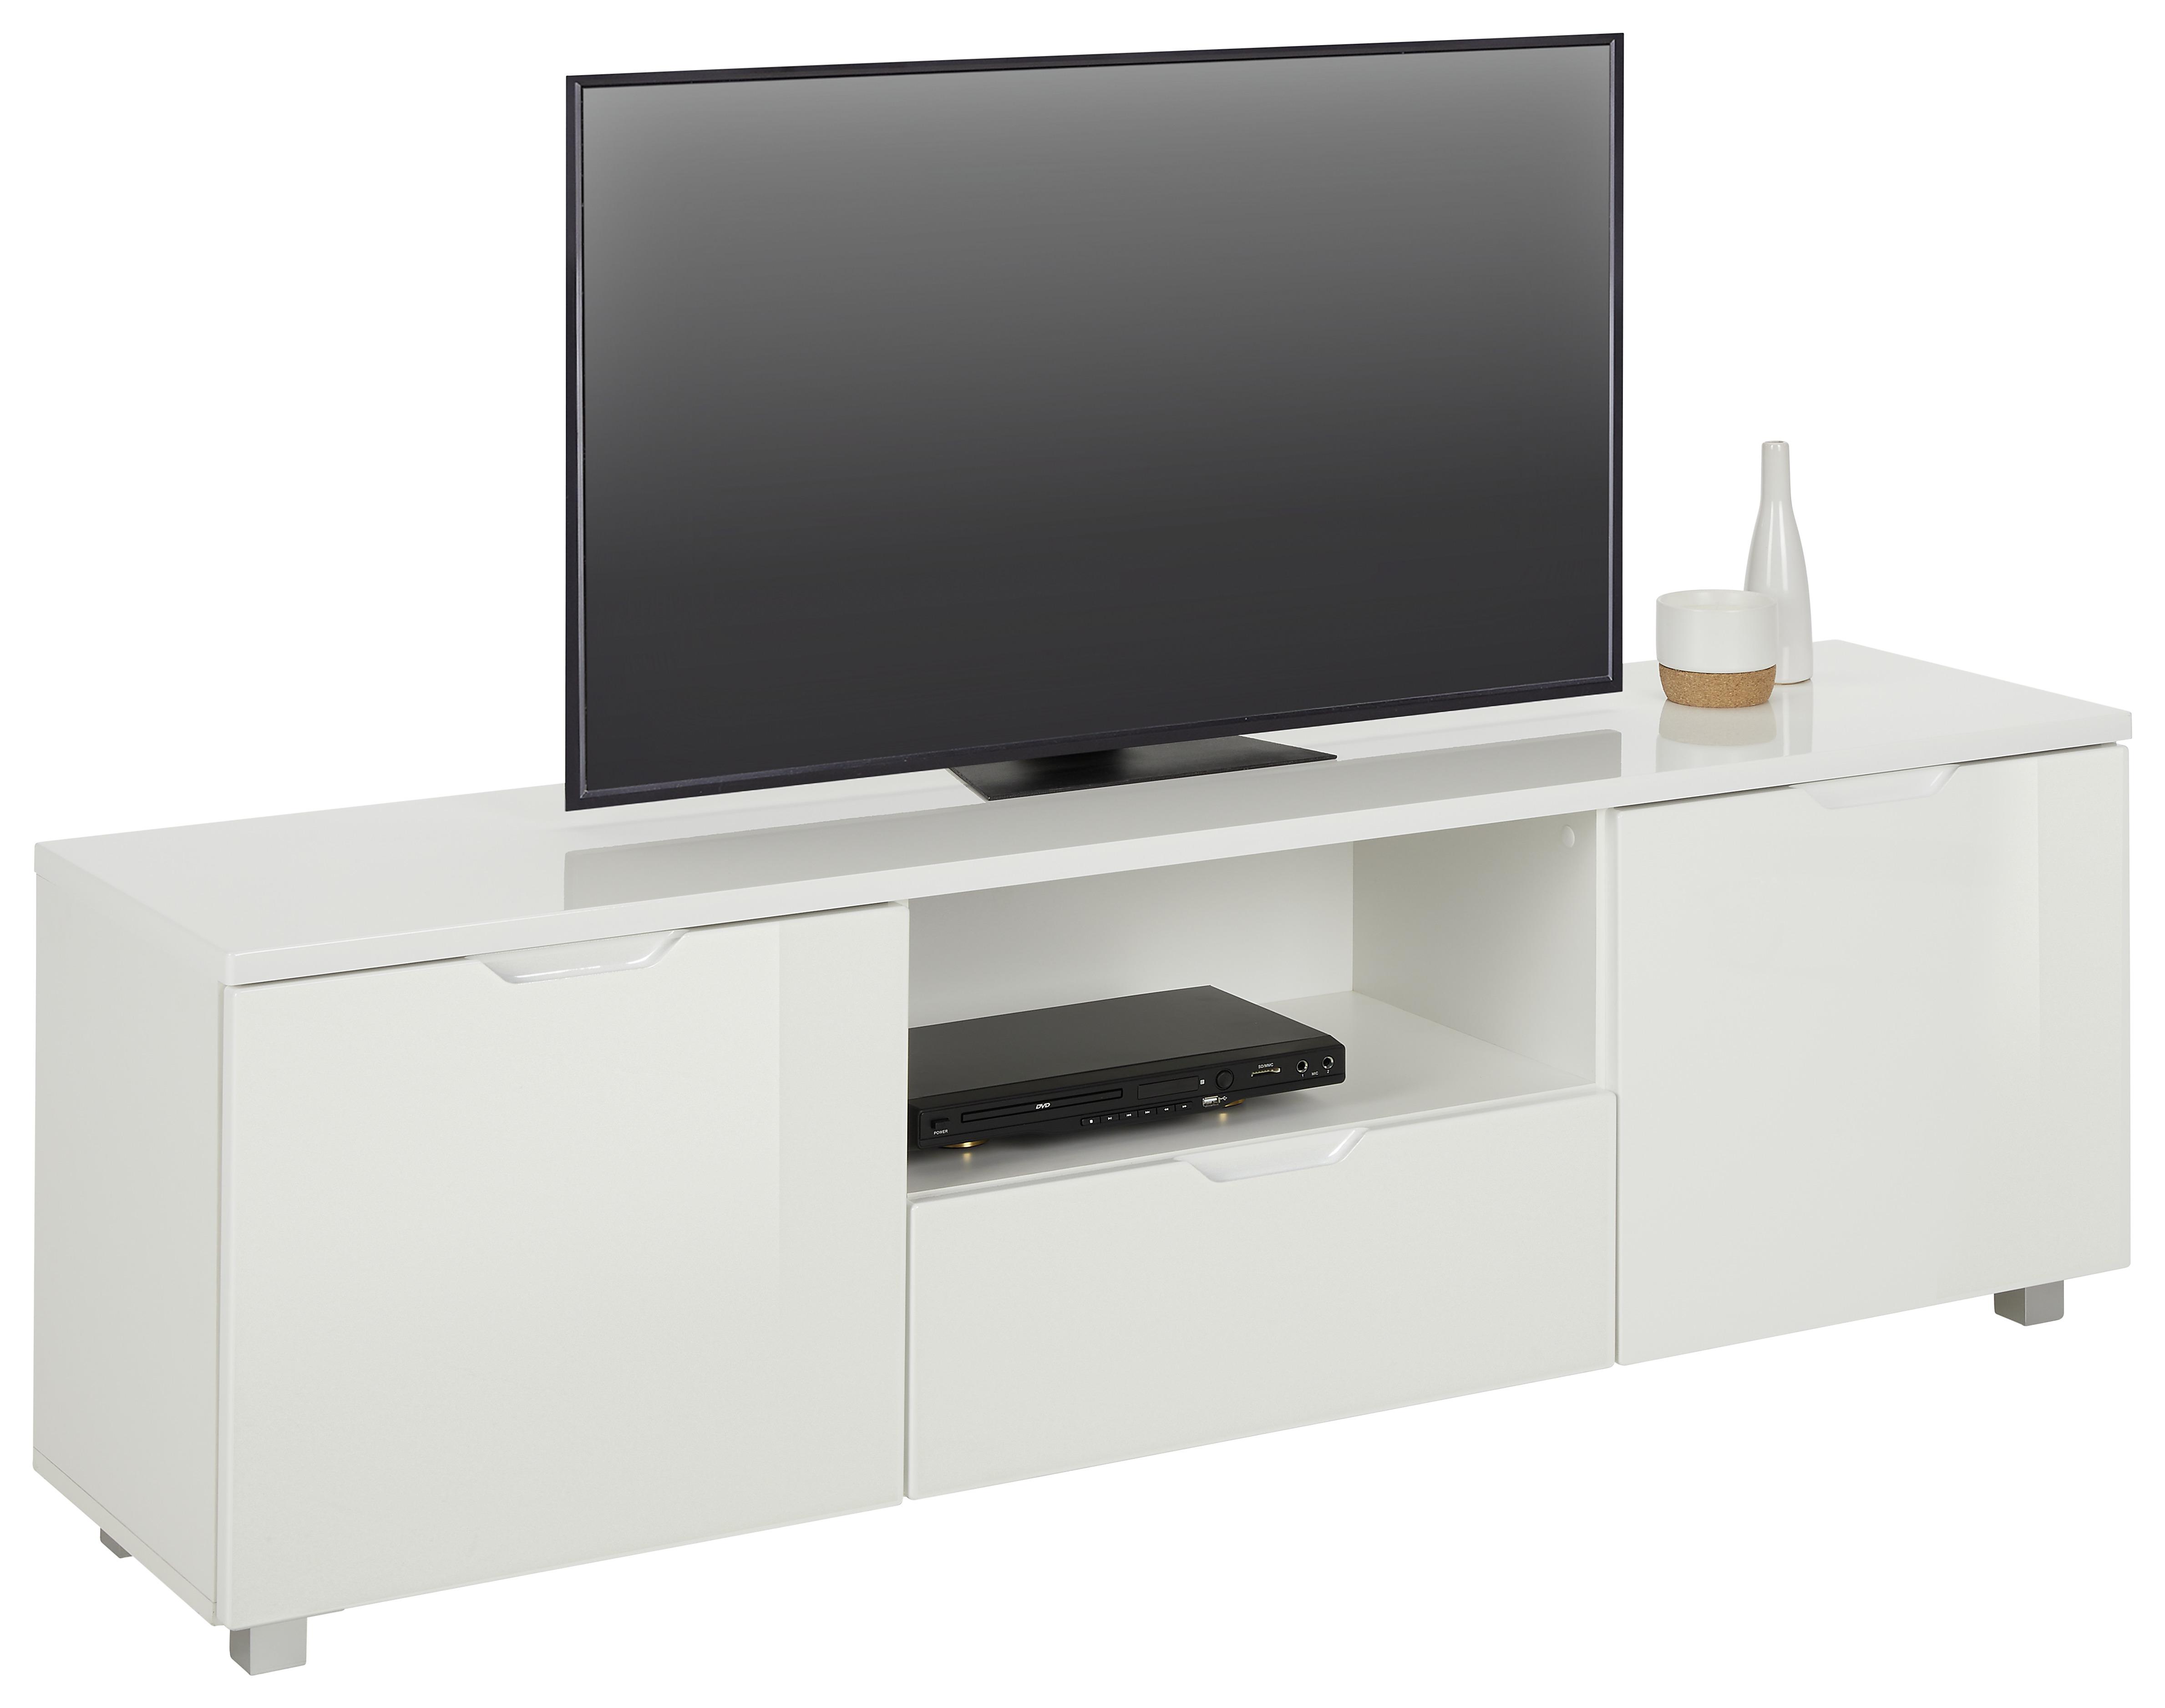 Lowboard in Weiß - Weiß, MODERN, Holzwerkstoff/Kunststoff (160/45/38cm) - Modern Living